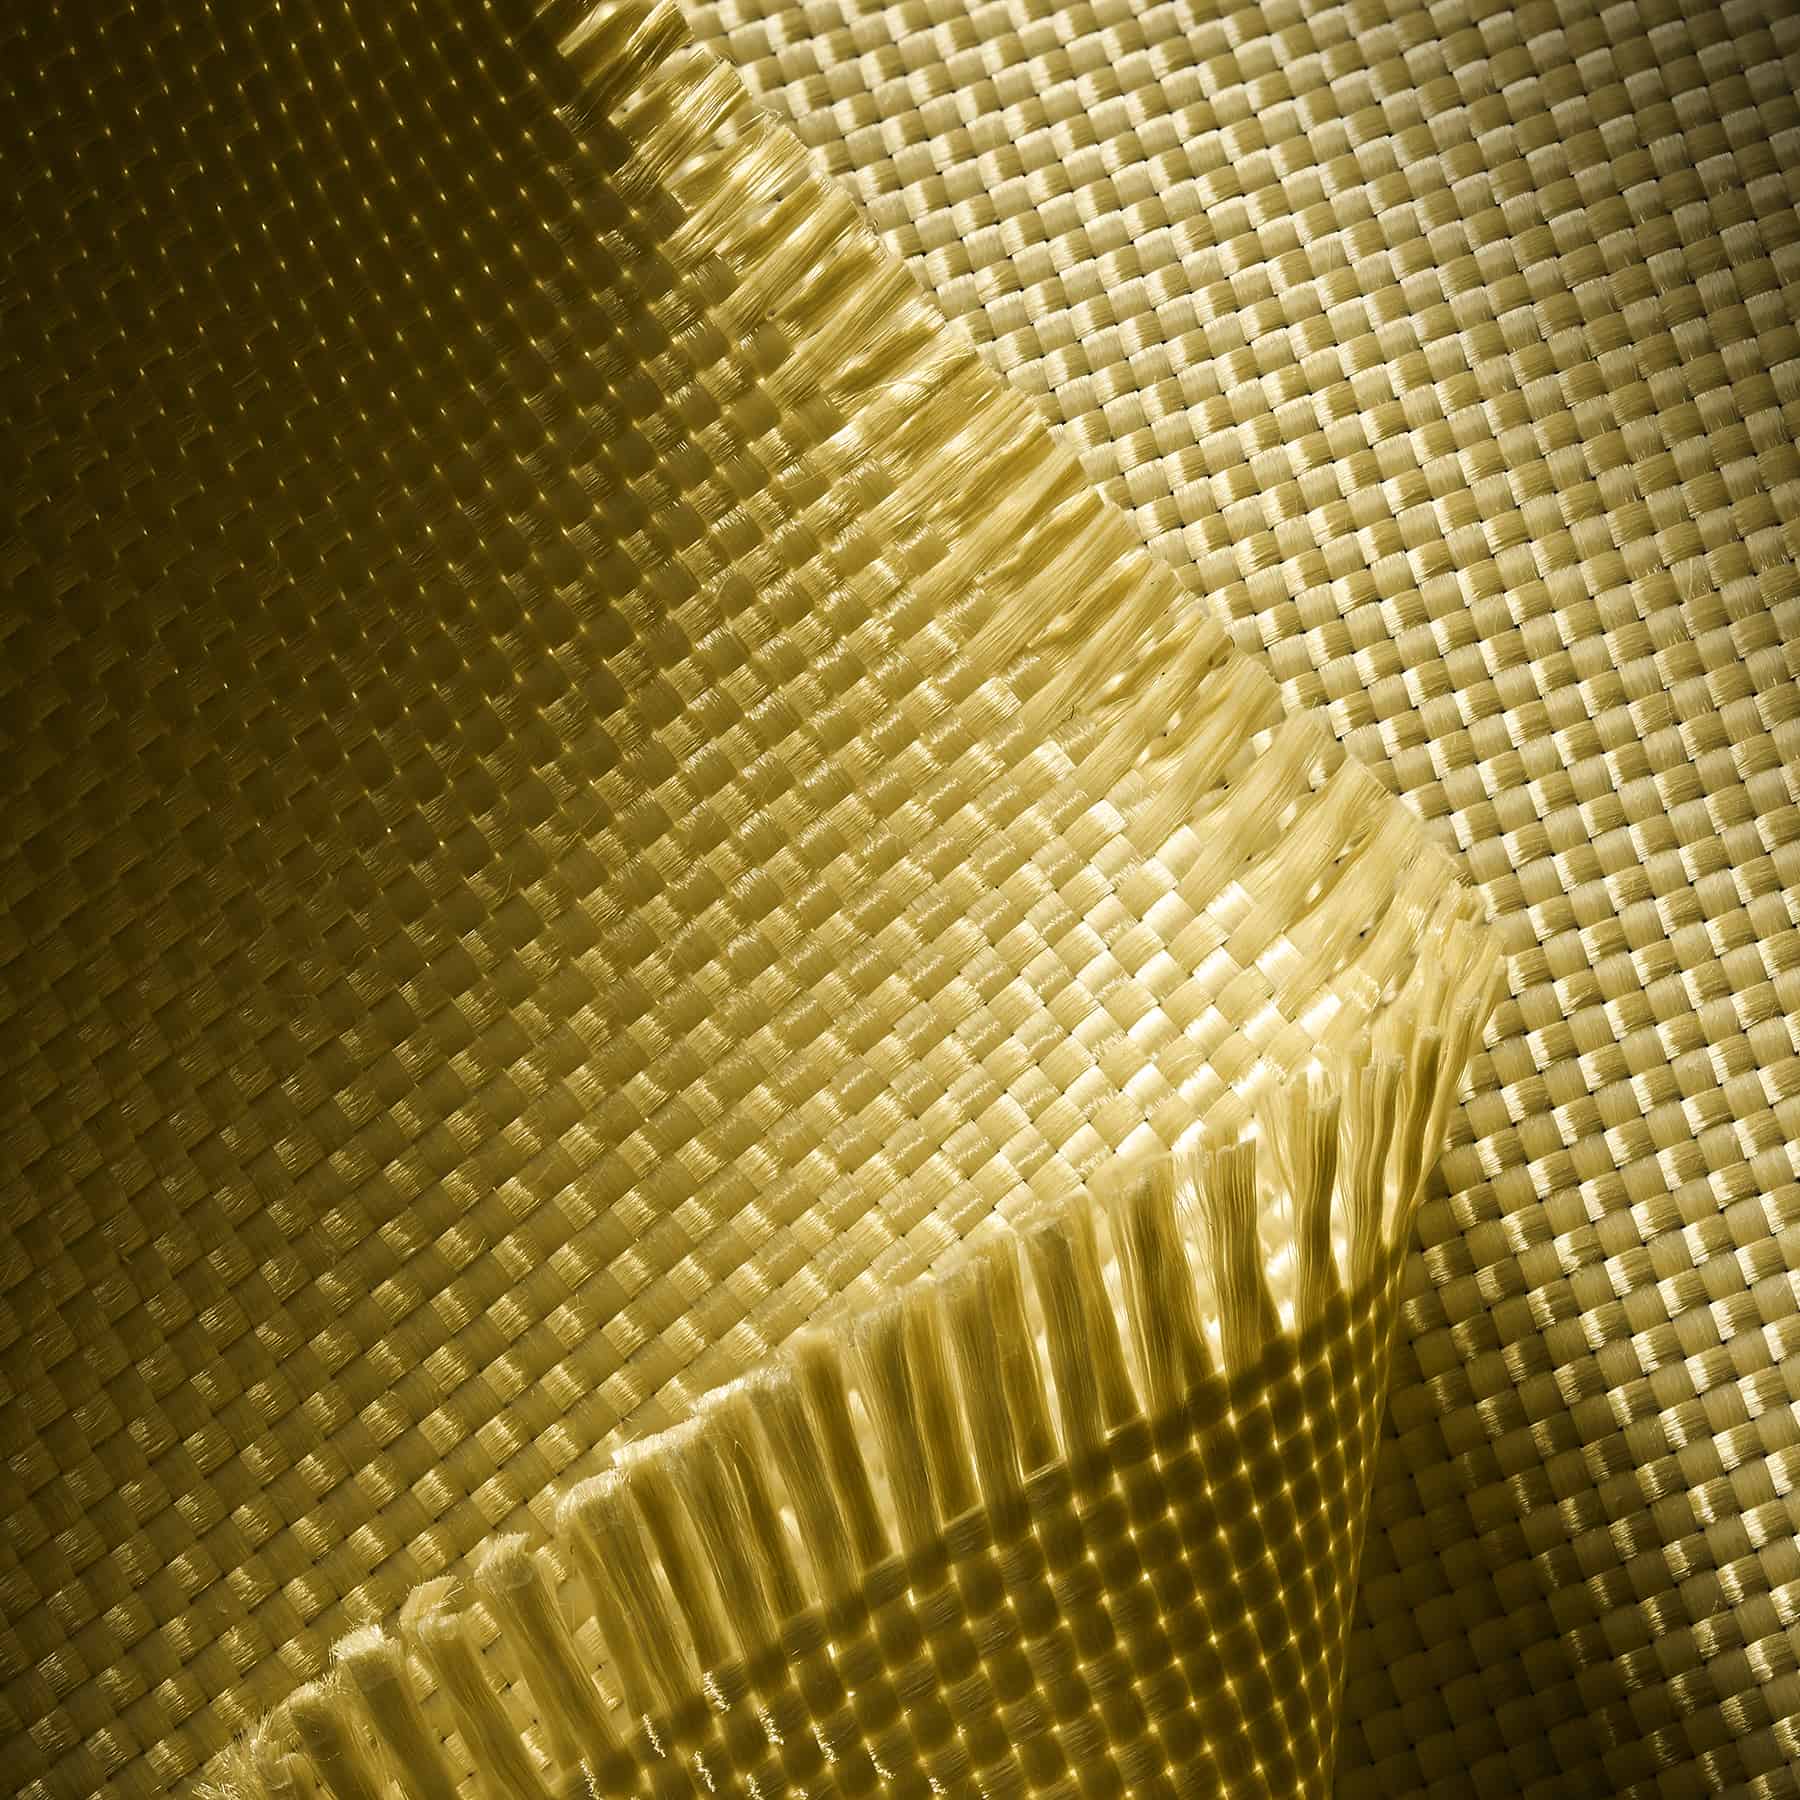 A close up image of Kevlar abrasion resistance fabric